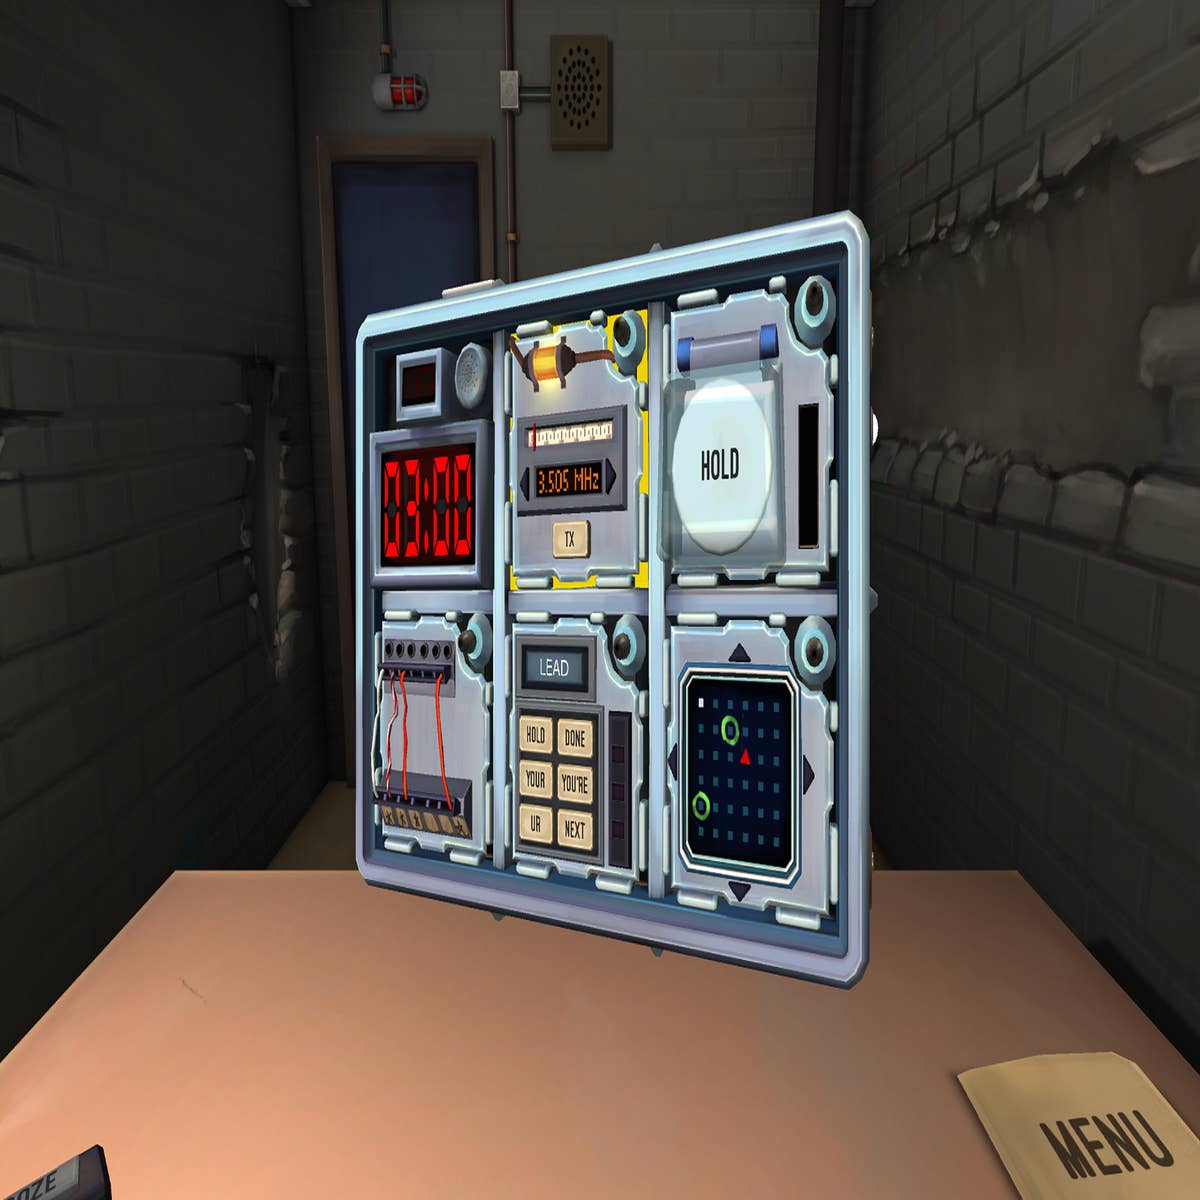 Defuse the BOMB Escape Room Stop Mission Party Top Secret